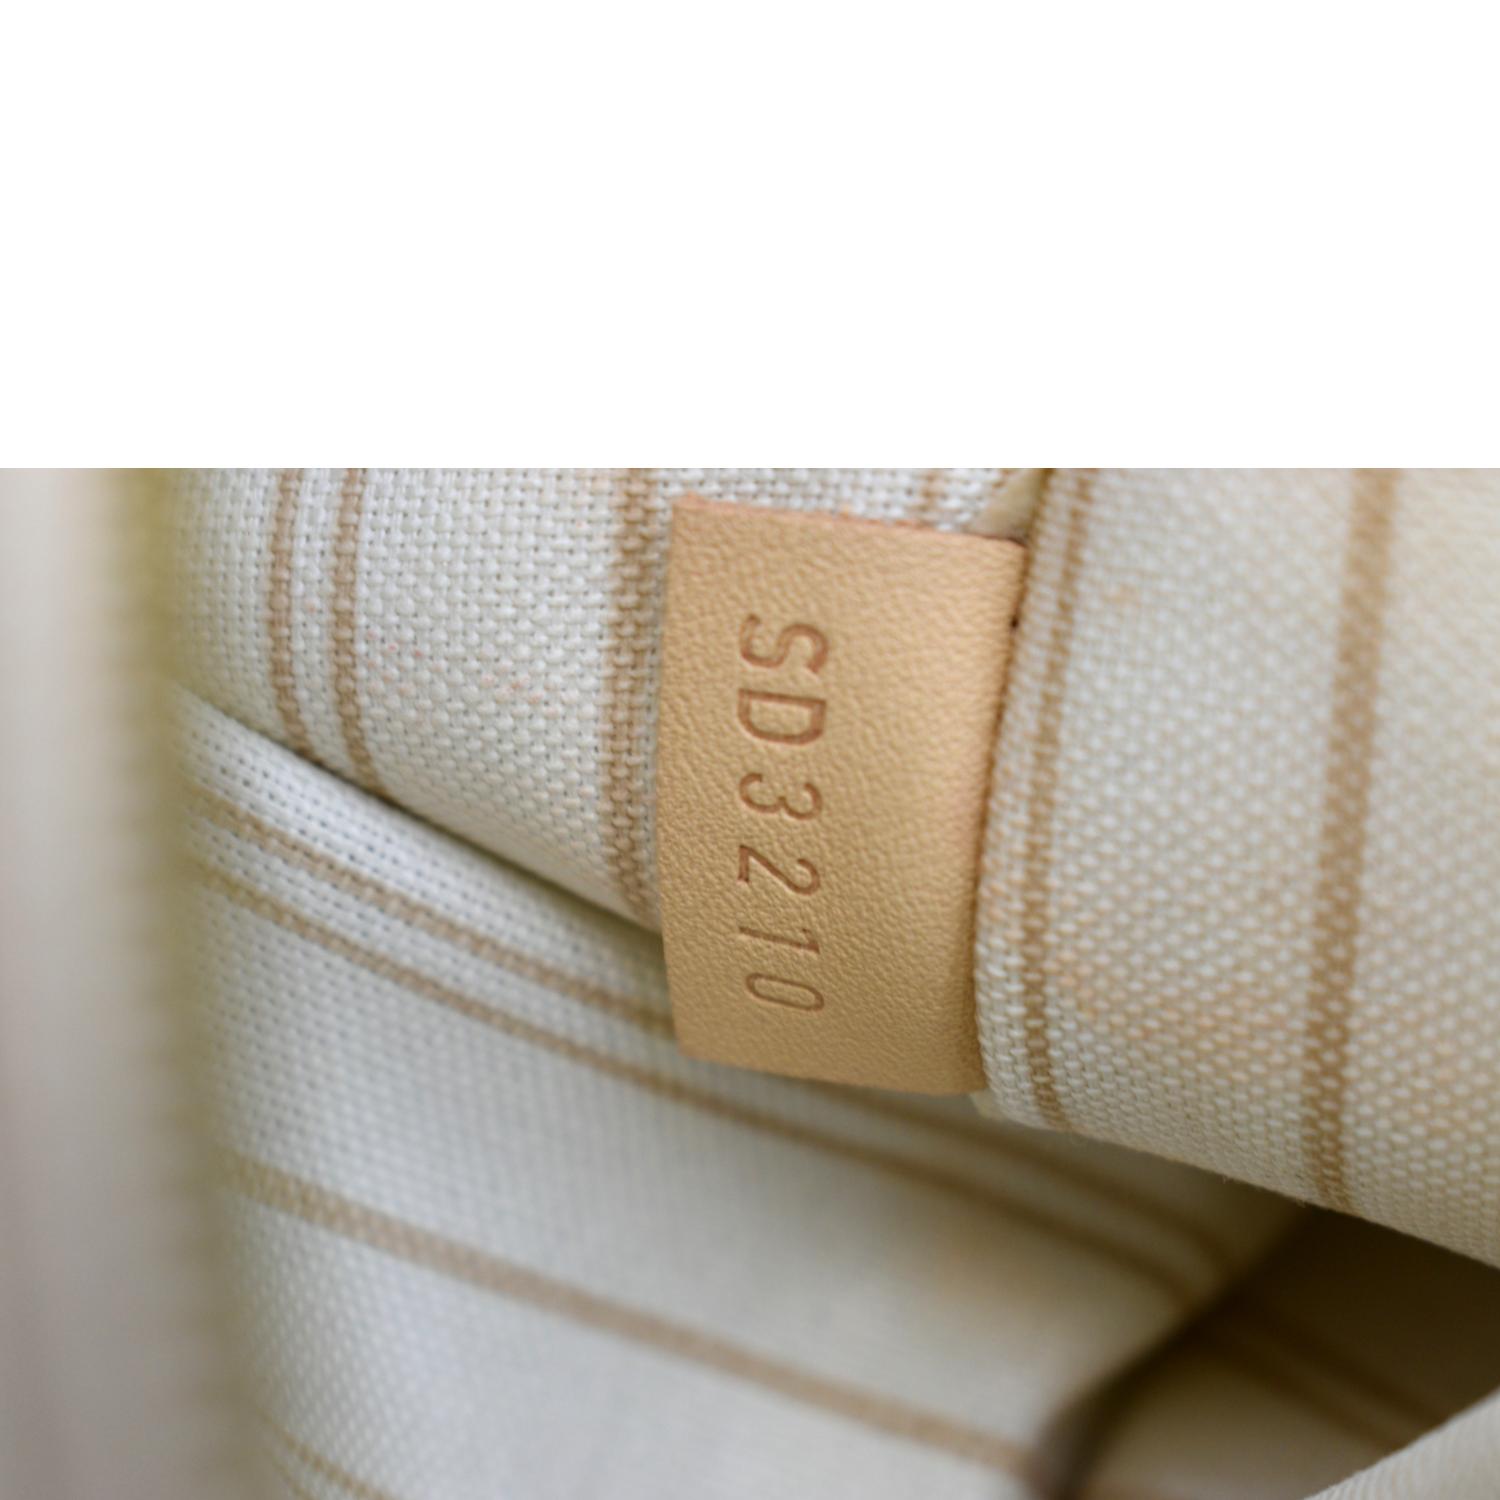 Louis Vuitton Neverfull MM Azur Damier White - $950 - From Fancy